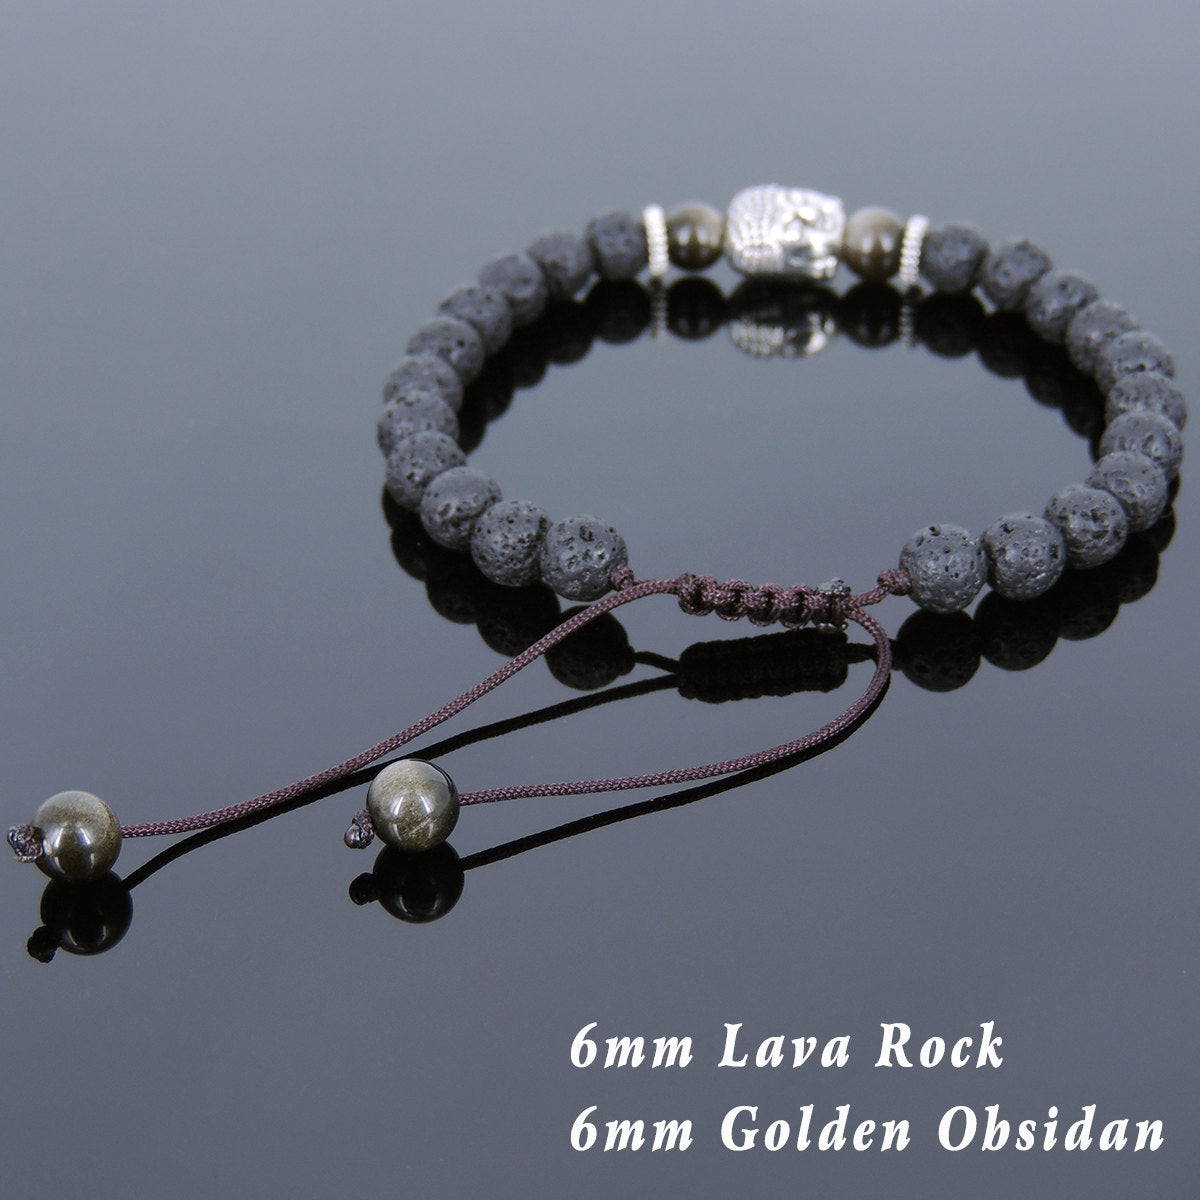 6mm Golden Obsidian & Lava Rock Adjustable Braided Stone Bracelet with Tibetan Silver Spacers & Sakyamuni Buddha Bead - Handmade by Gem & Silver TSB236